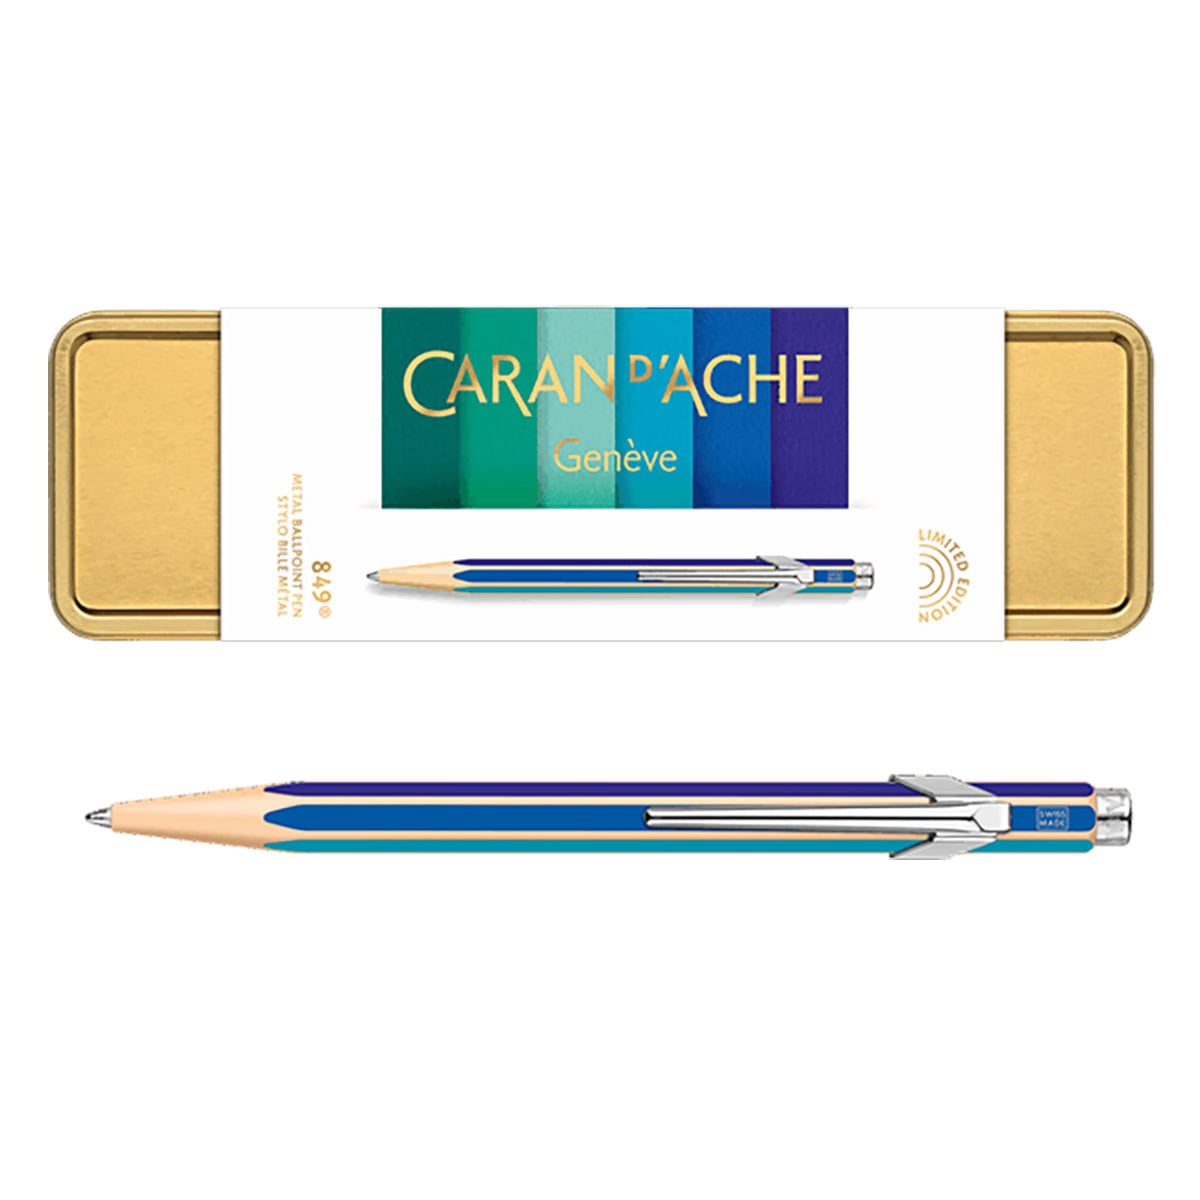 【CARAN D'ACHE/カランダッシュ】カラートレジャー849コールドレインボー ボールペン【限定品】 590Co.